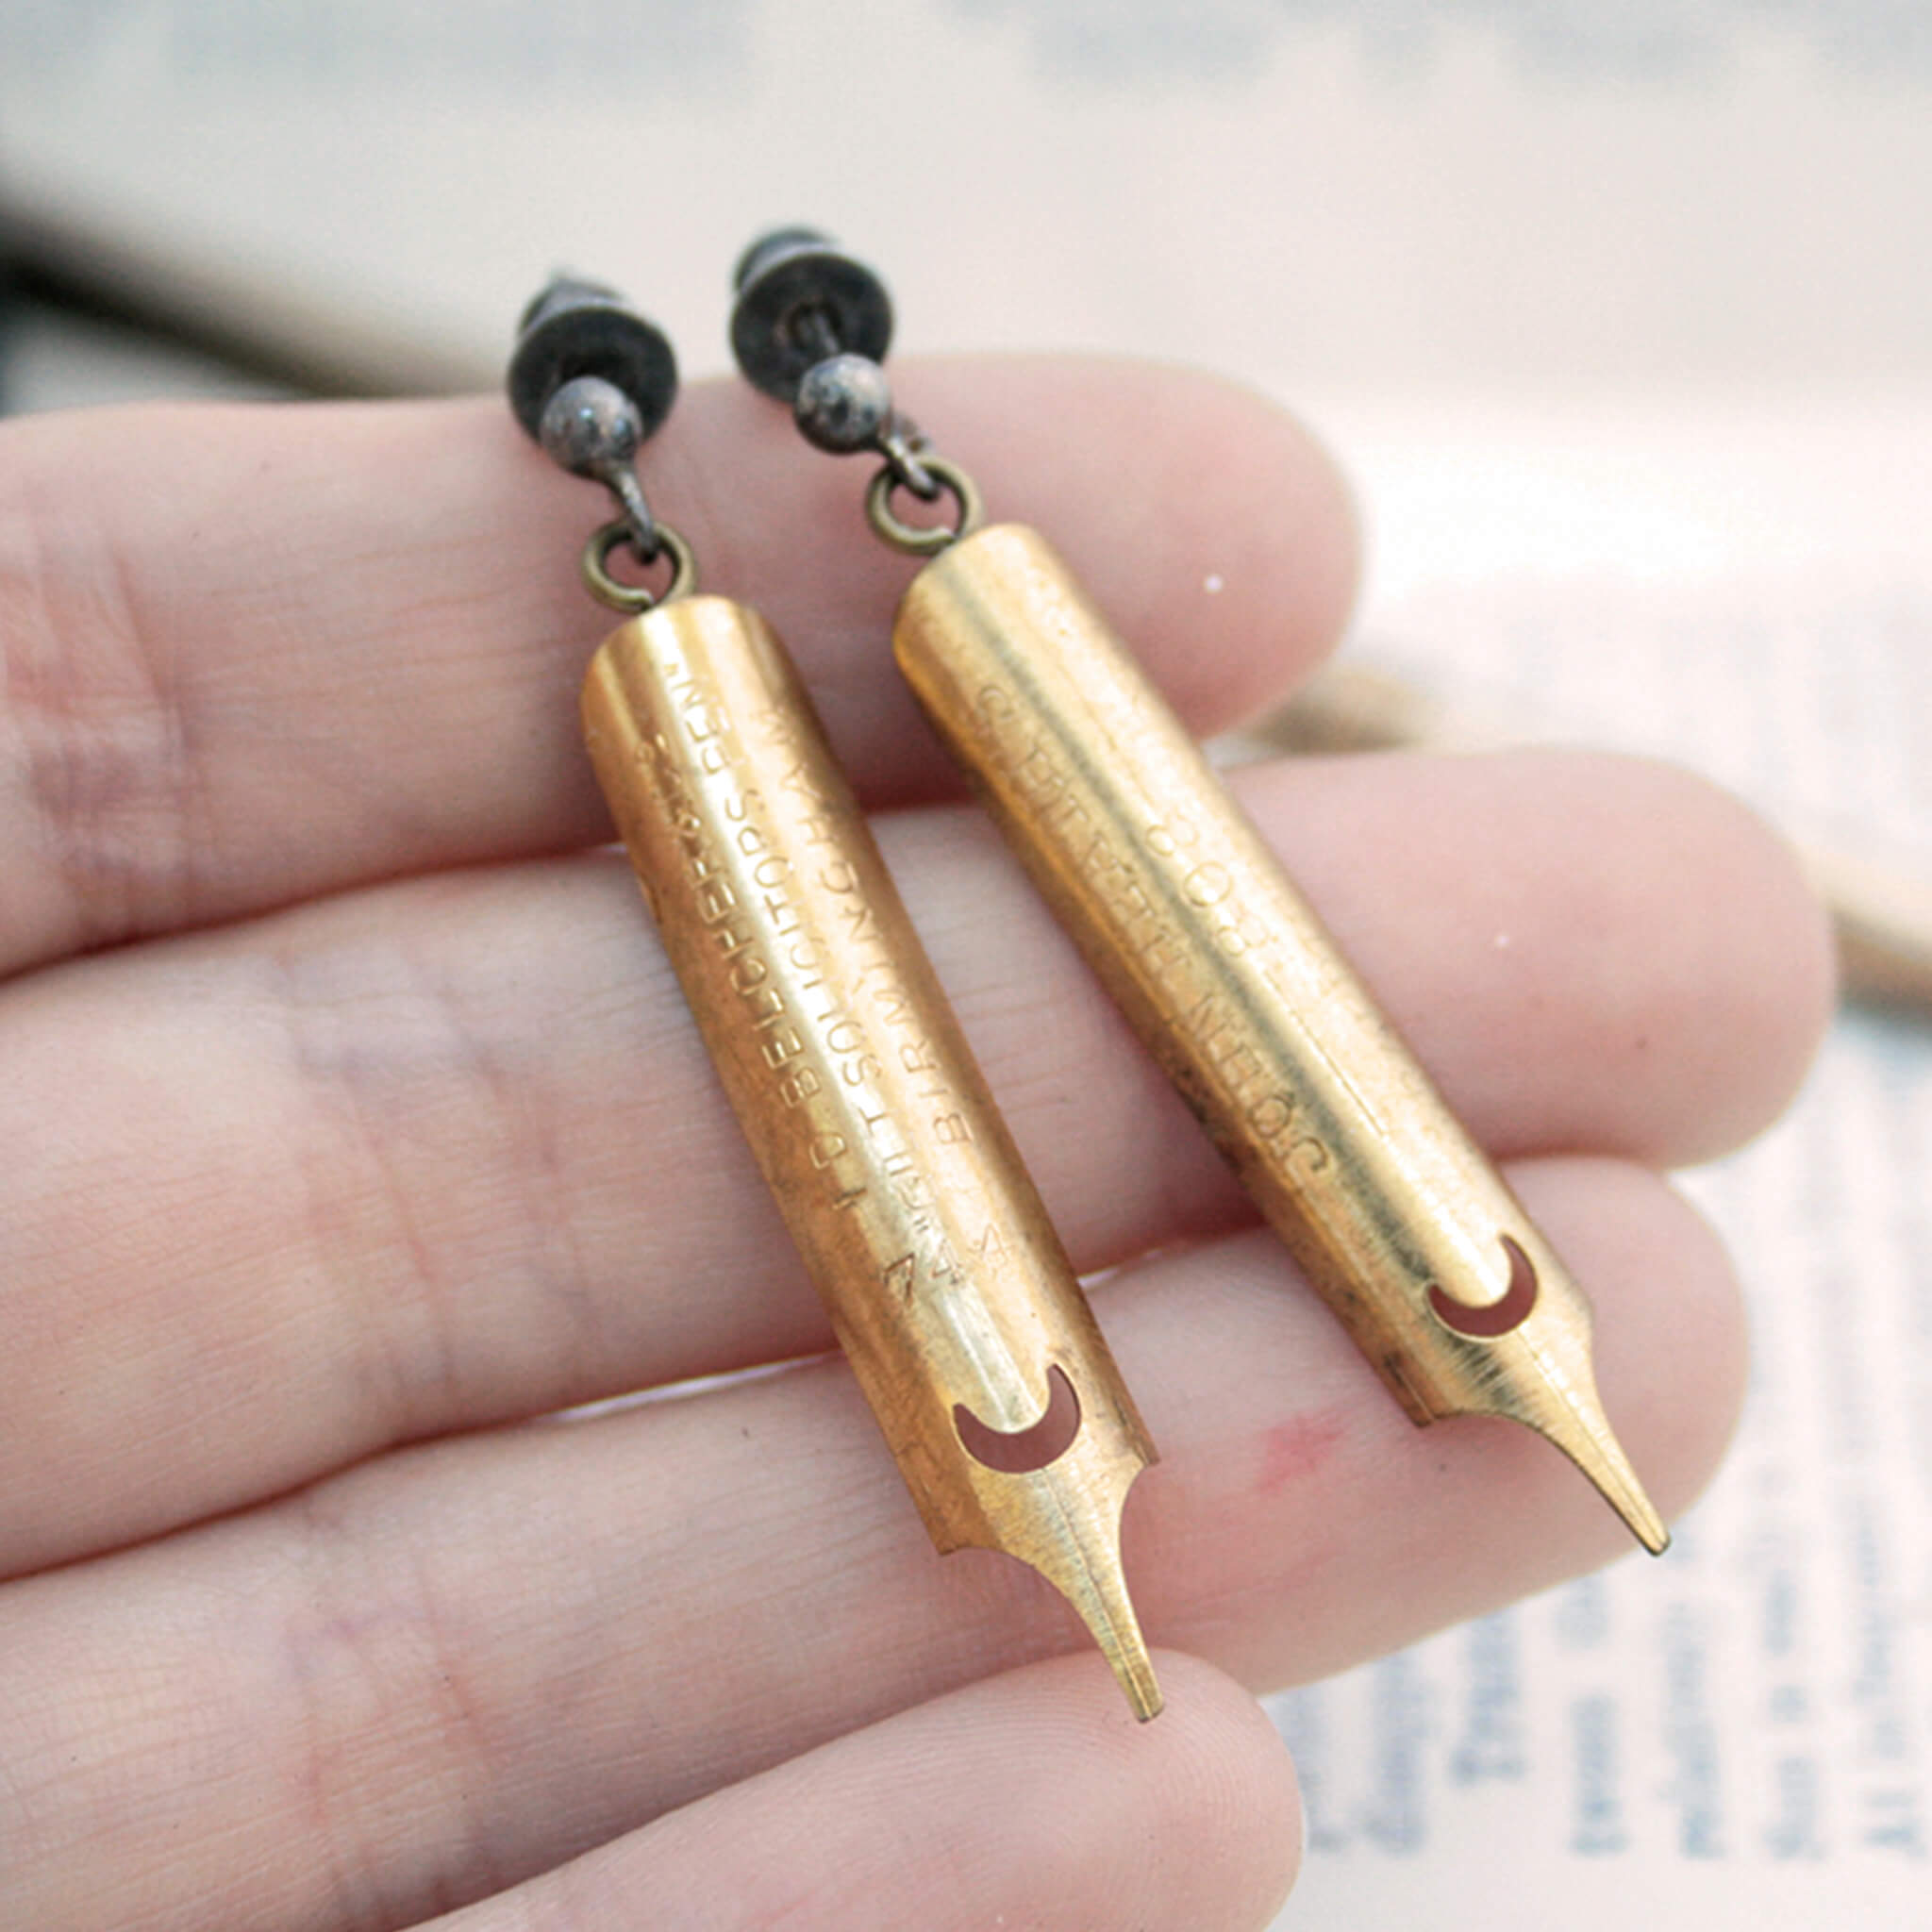 gold coated pen nib earrings lying on a hand